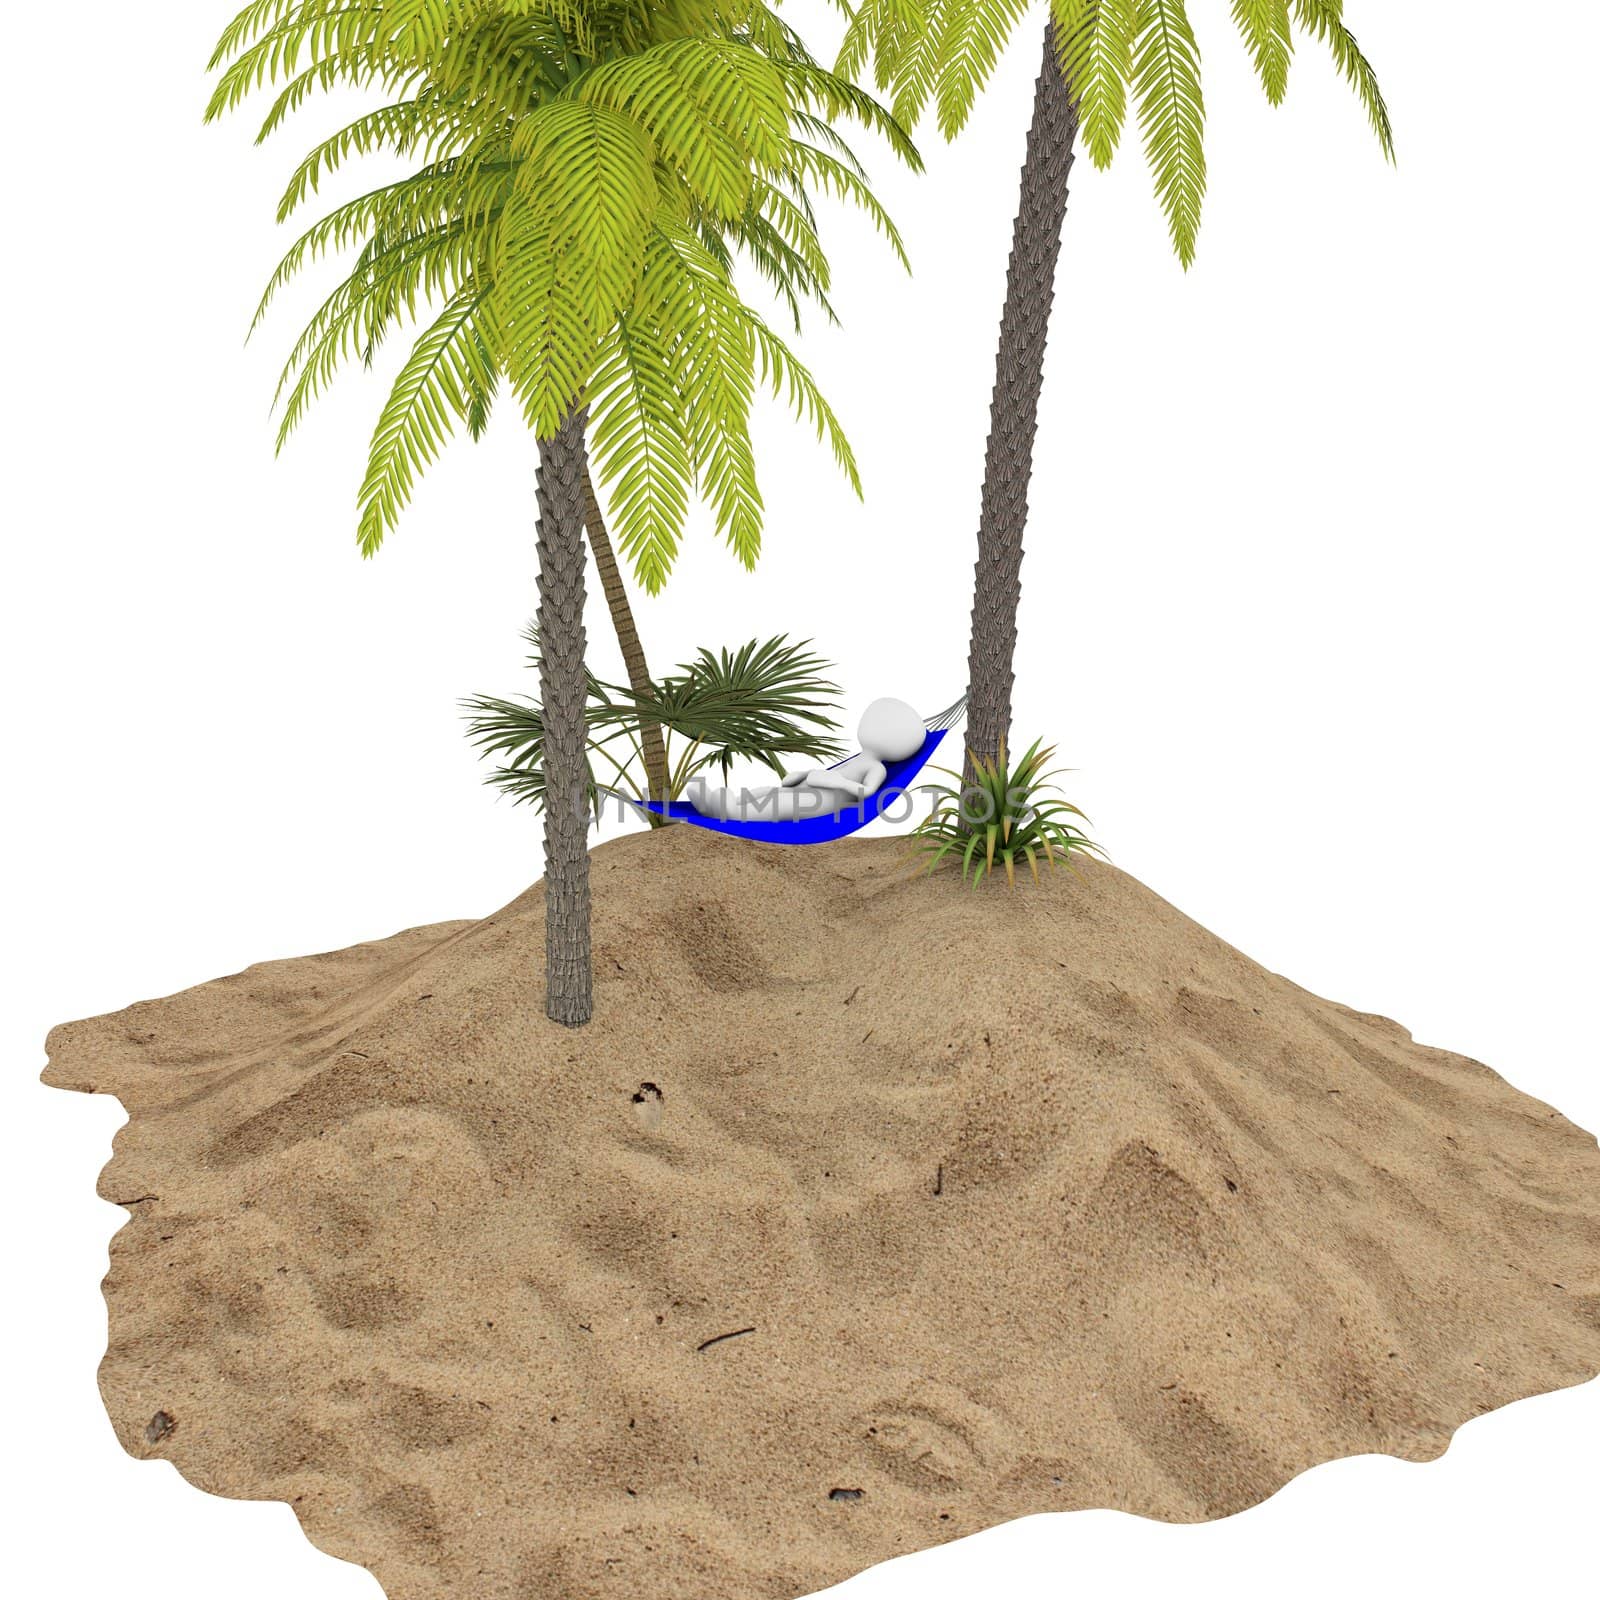 The Palm Island by 3DAgentur